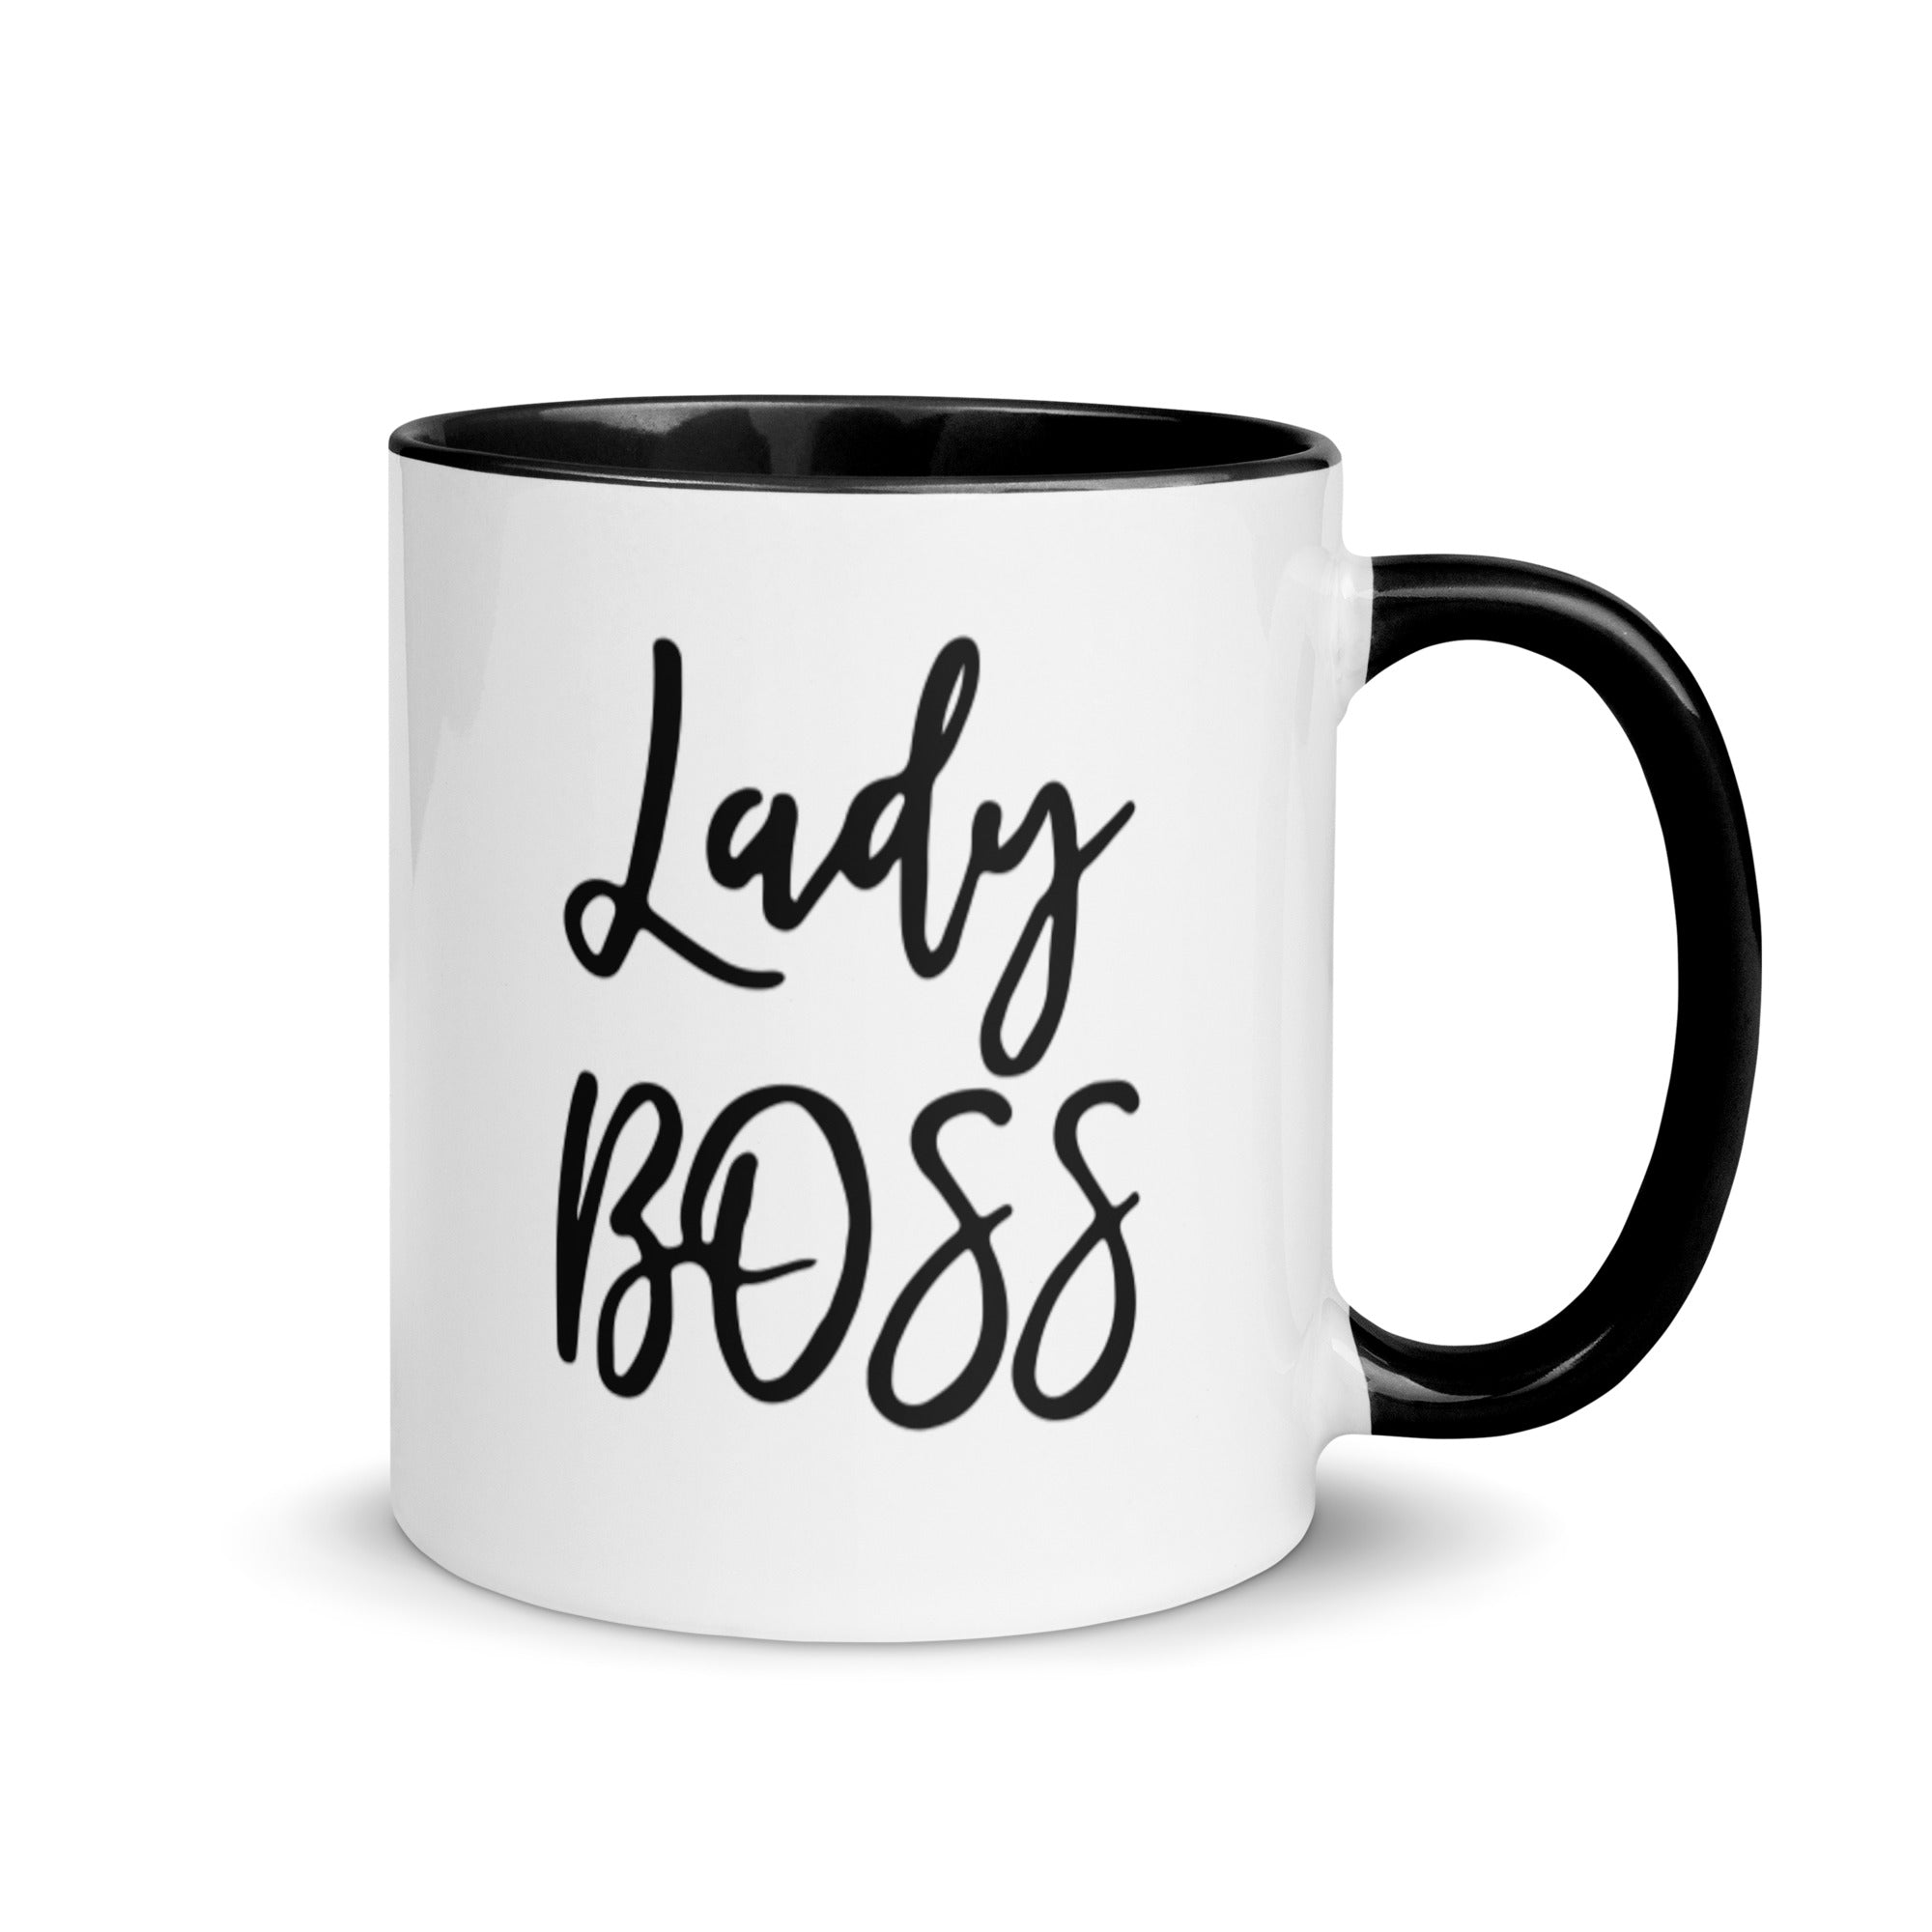 Lady BOSS White Ceramic  Mug With Color Inside